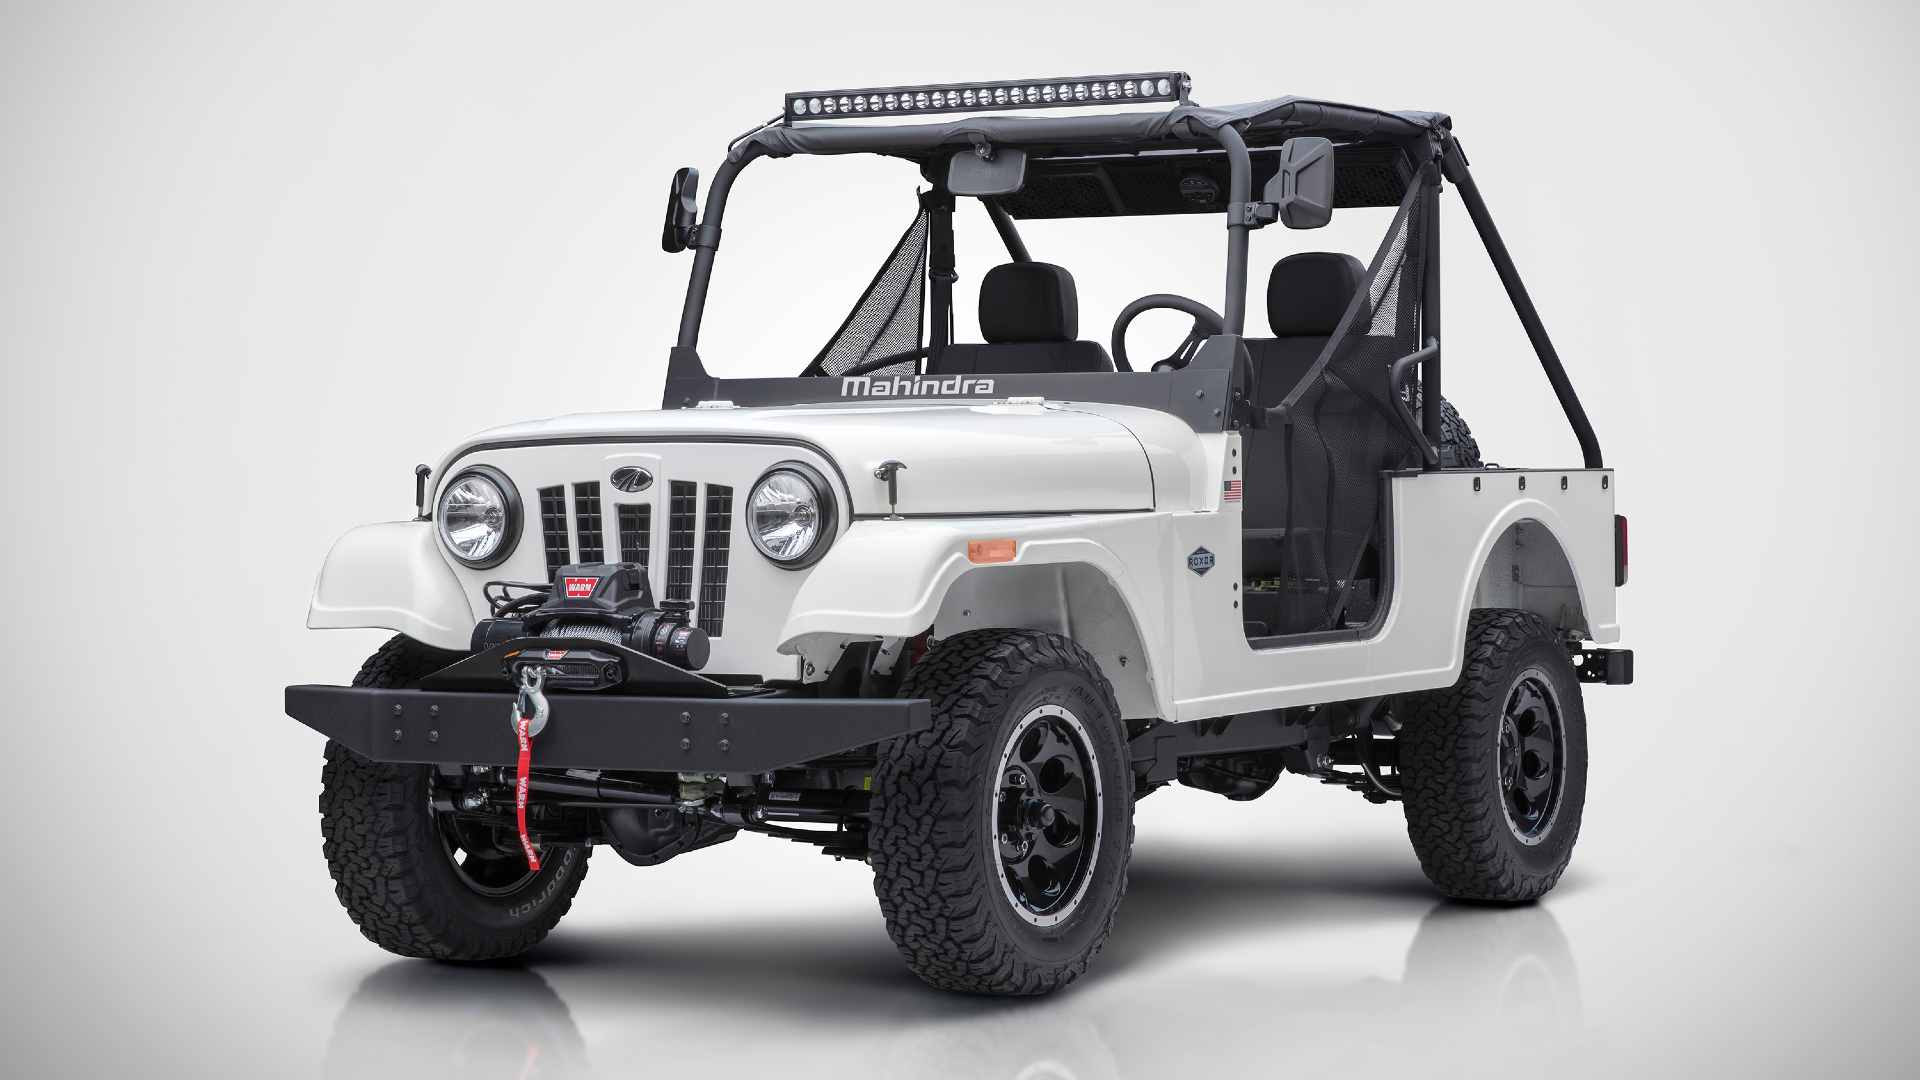 Mahindra's Roxor off-highway vehicle was deemed to violate Jeep's trade dress in the US. Image: Mahindra